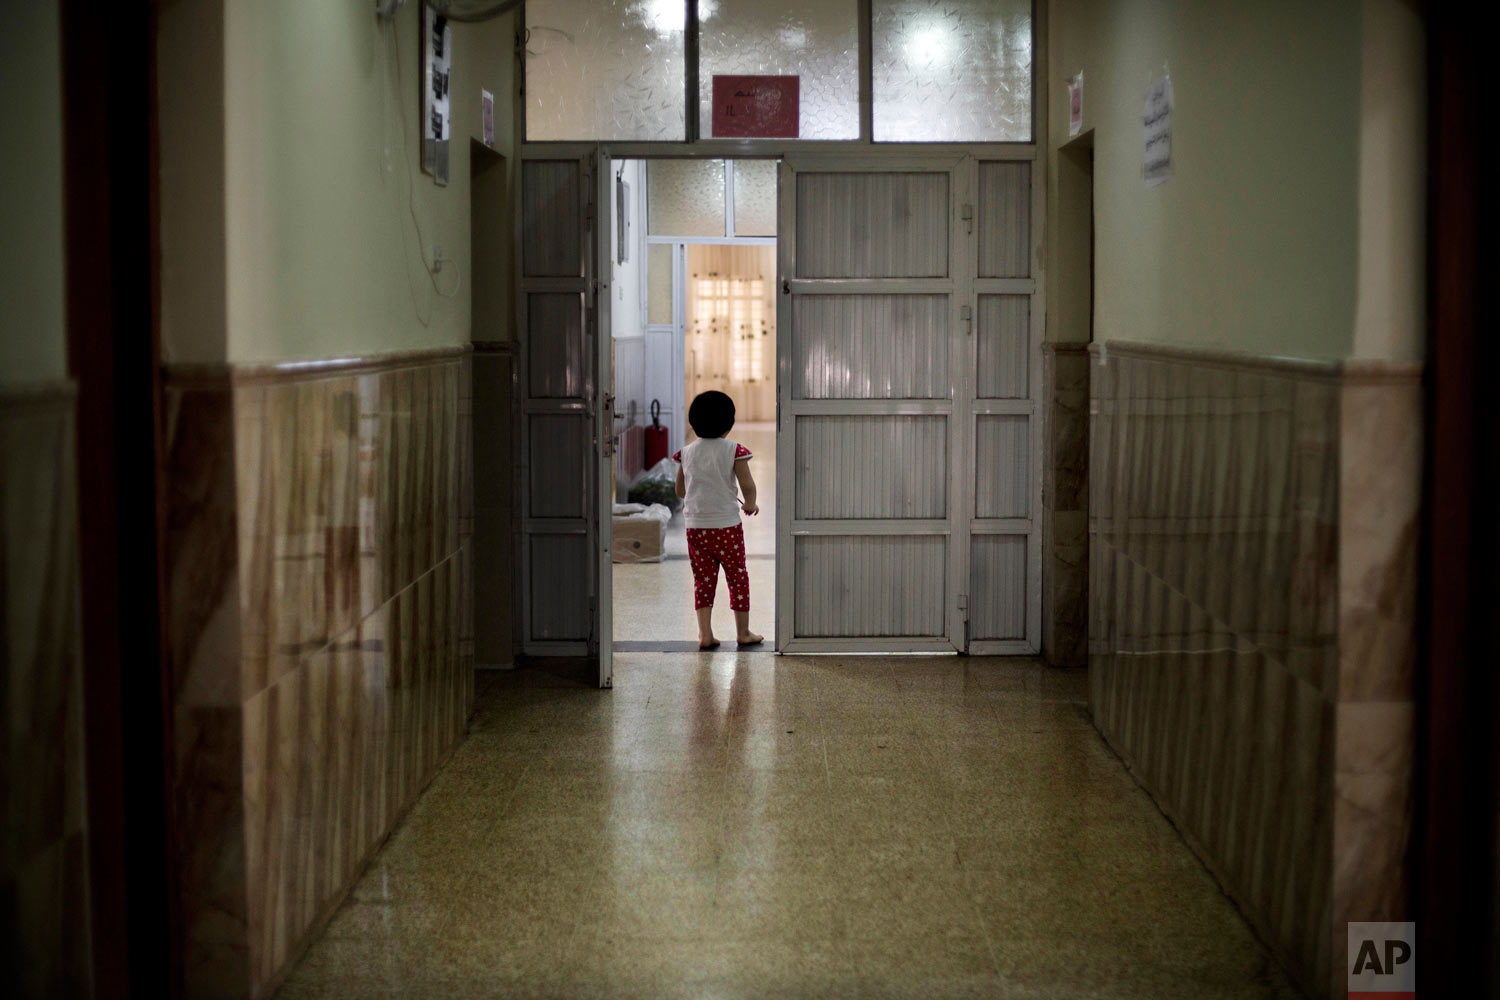  A girl wanders through a hallway at the state-run al-Zuhour orphanage in Mosul, Iraq. (AP Photo/Maya Alleruzzo) 